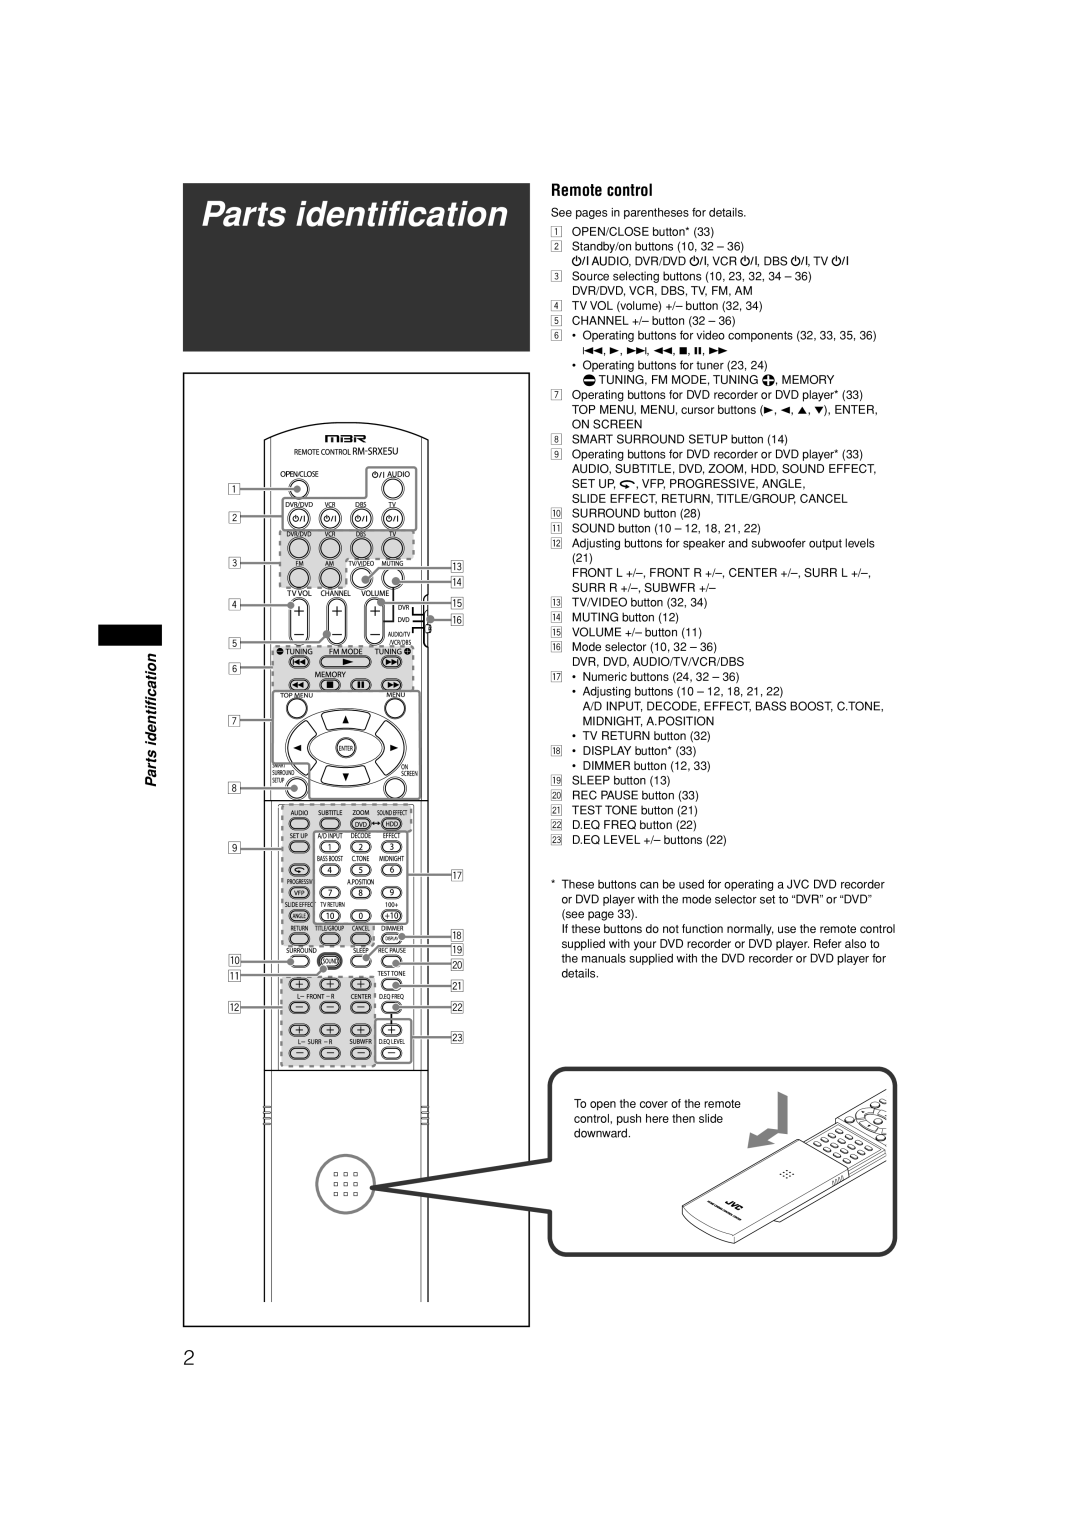 JVC RX-E11S manual Parts identification, Remote control, 8 9 p q w, e r t y 